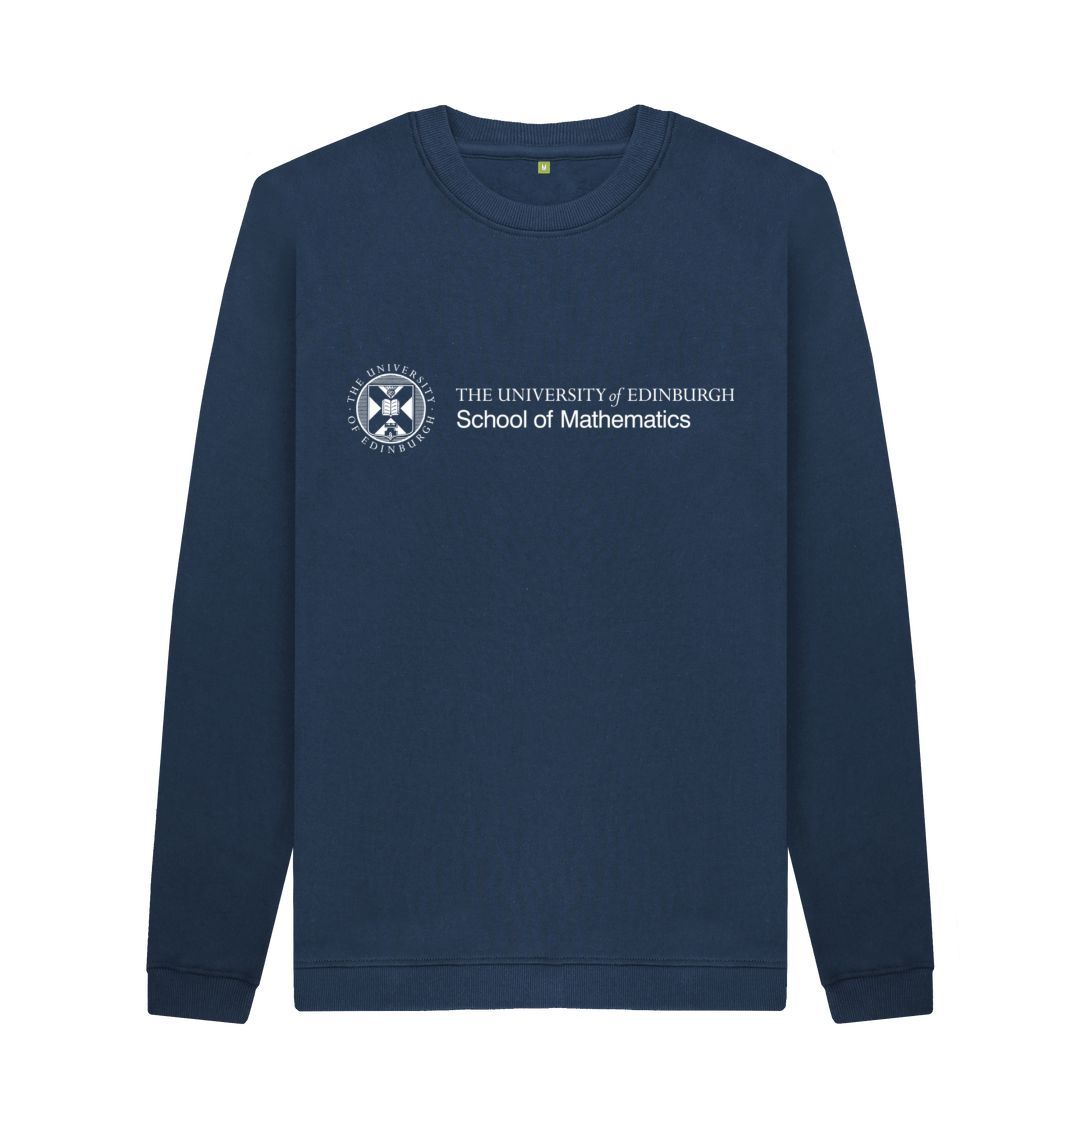 Navy sweatshirt with white University crest and text that reads ' University of Edinburgh School of Mathematics